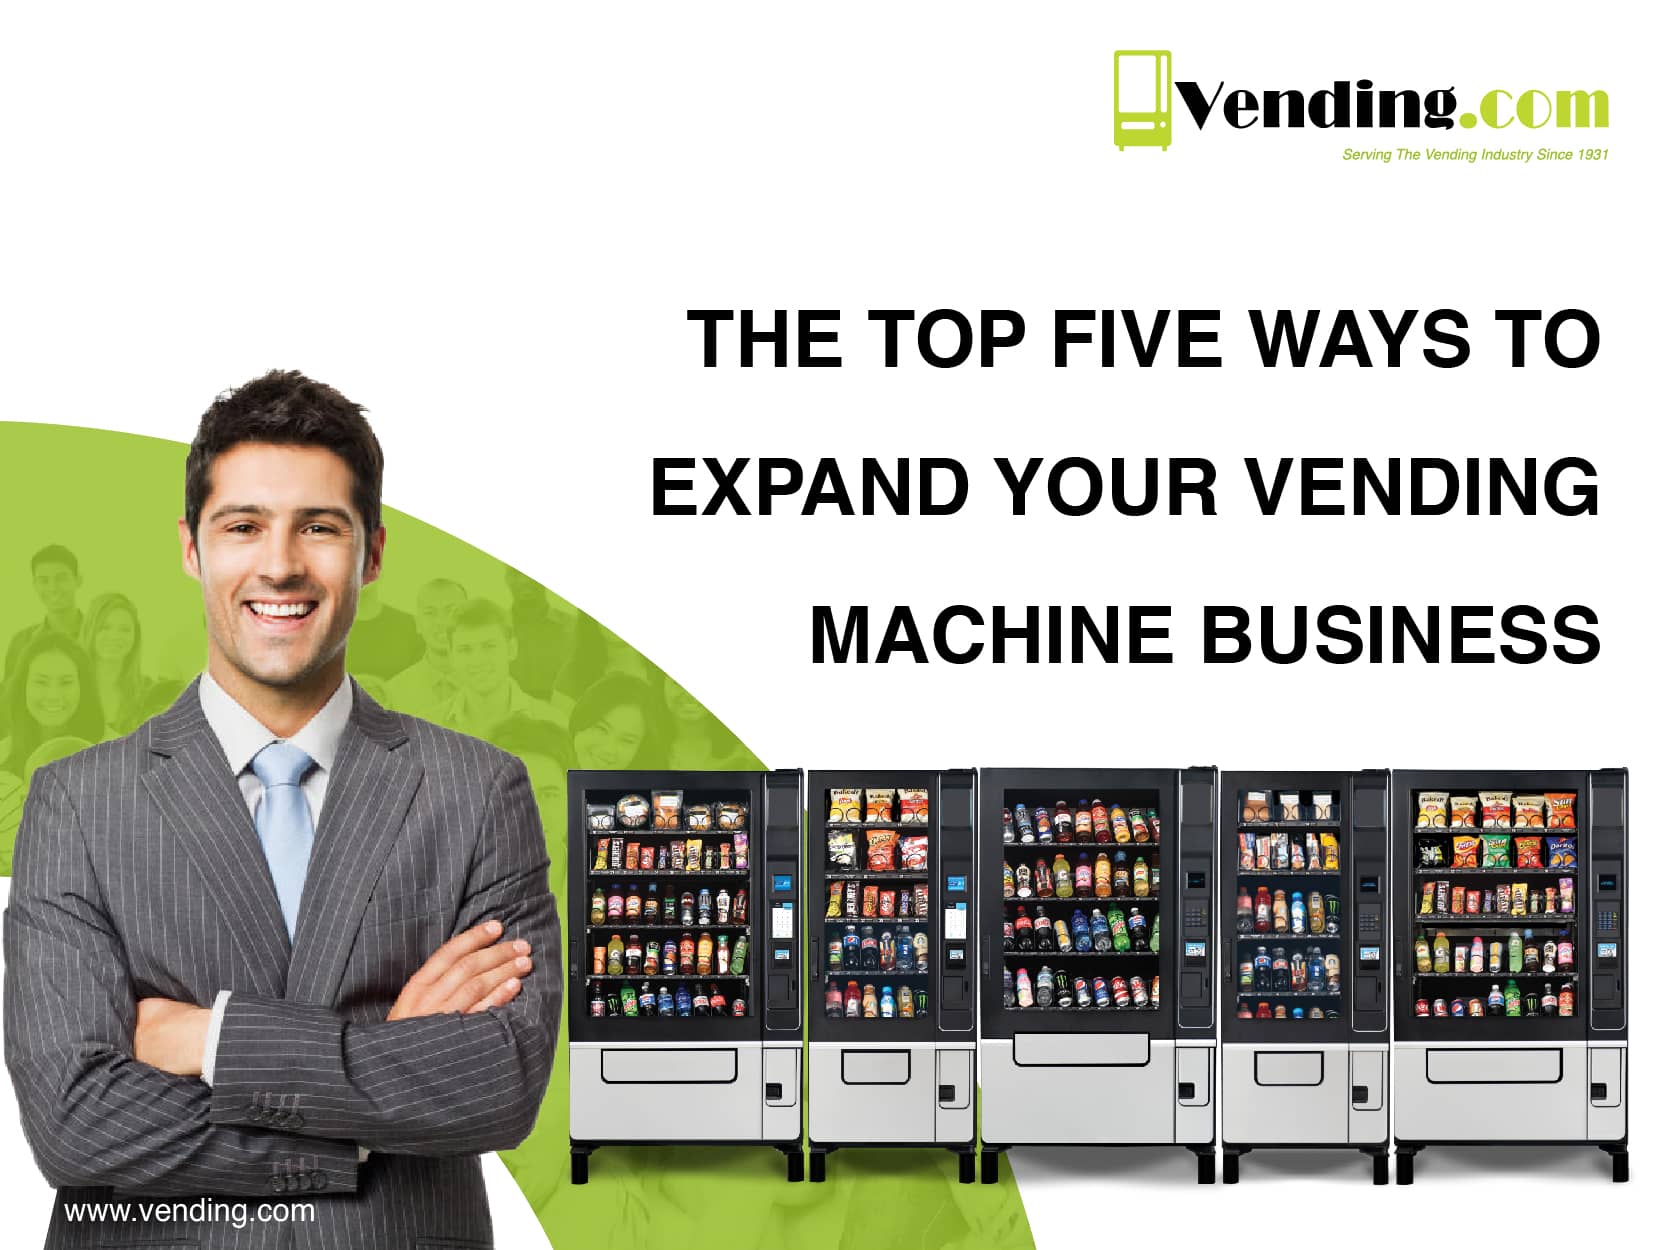 Top 5 Ways To Expand Your Vending Business - Vending.com